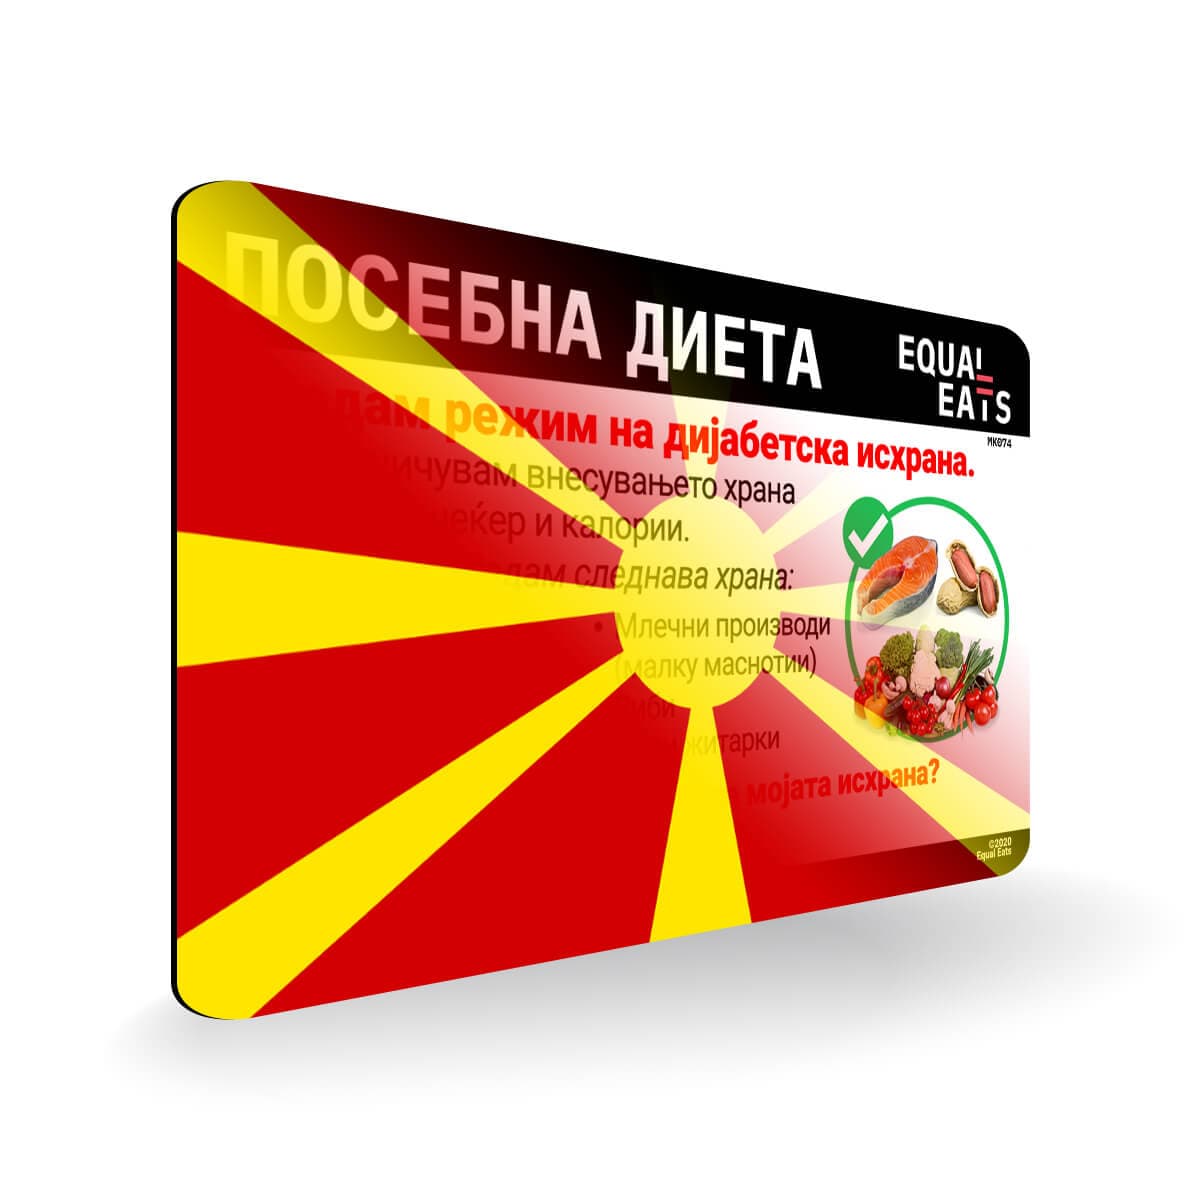 Diabetic Diet in Macedonian. Diabetes Card for Macedonia Travel